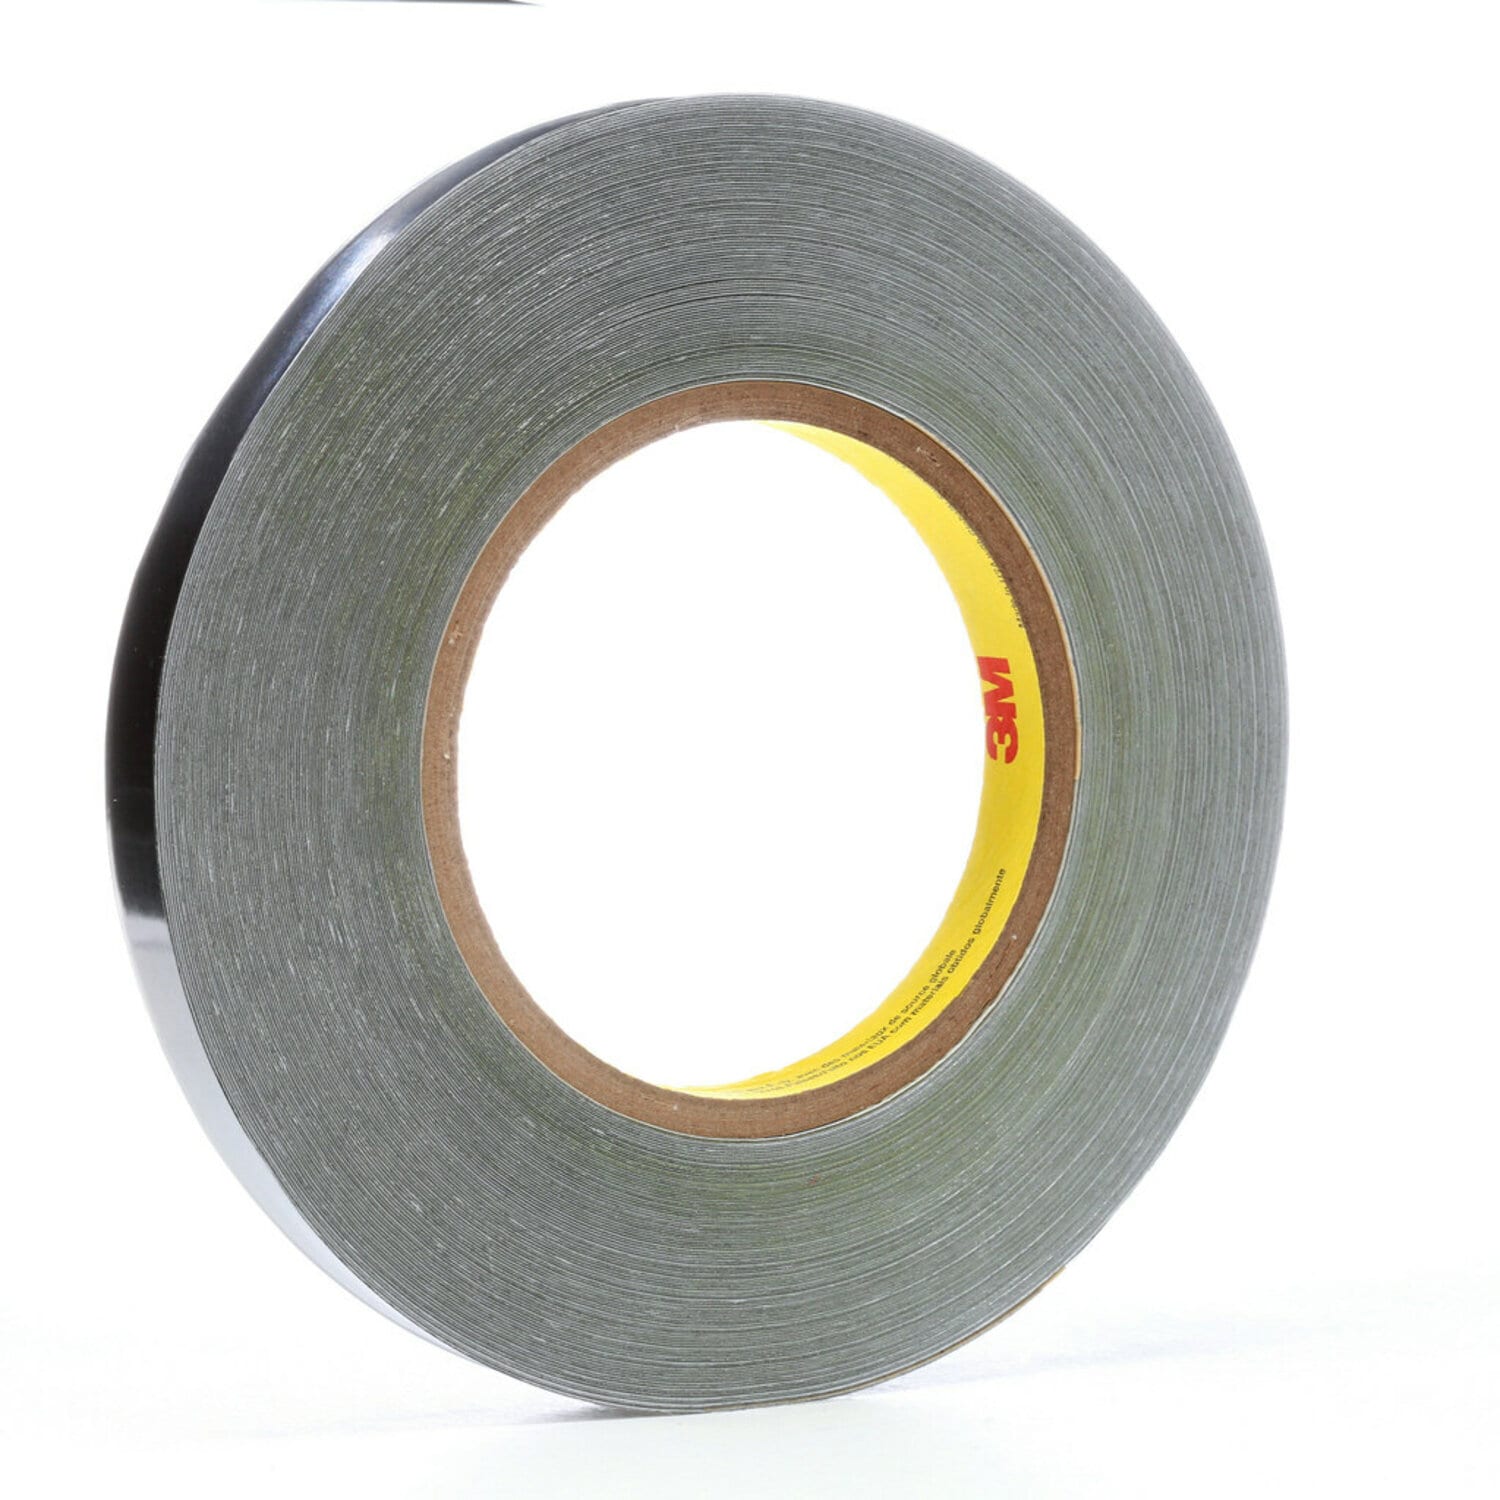 7100219354 - 3M Lead Foil Tape 420, Dark Silver, 1/4 in x 36 yd, 6.8 mil, Roll